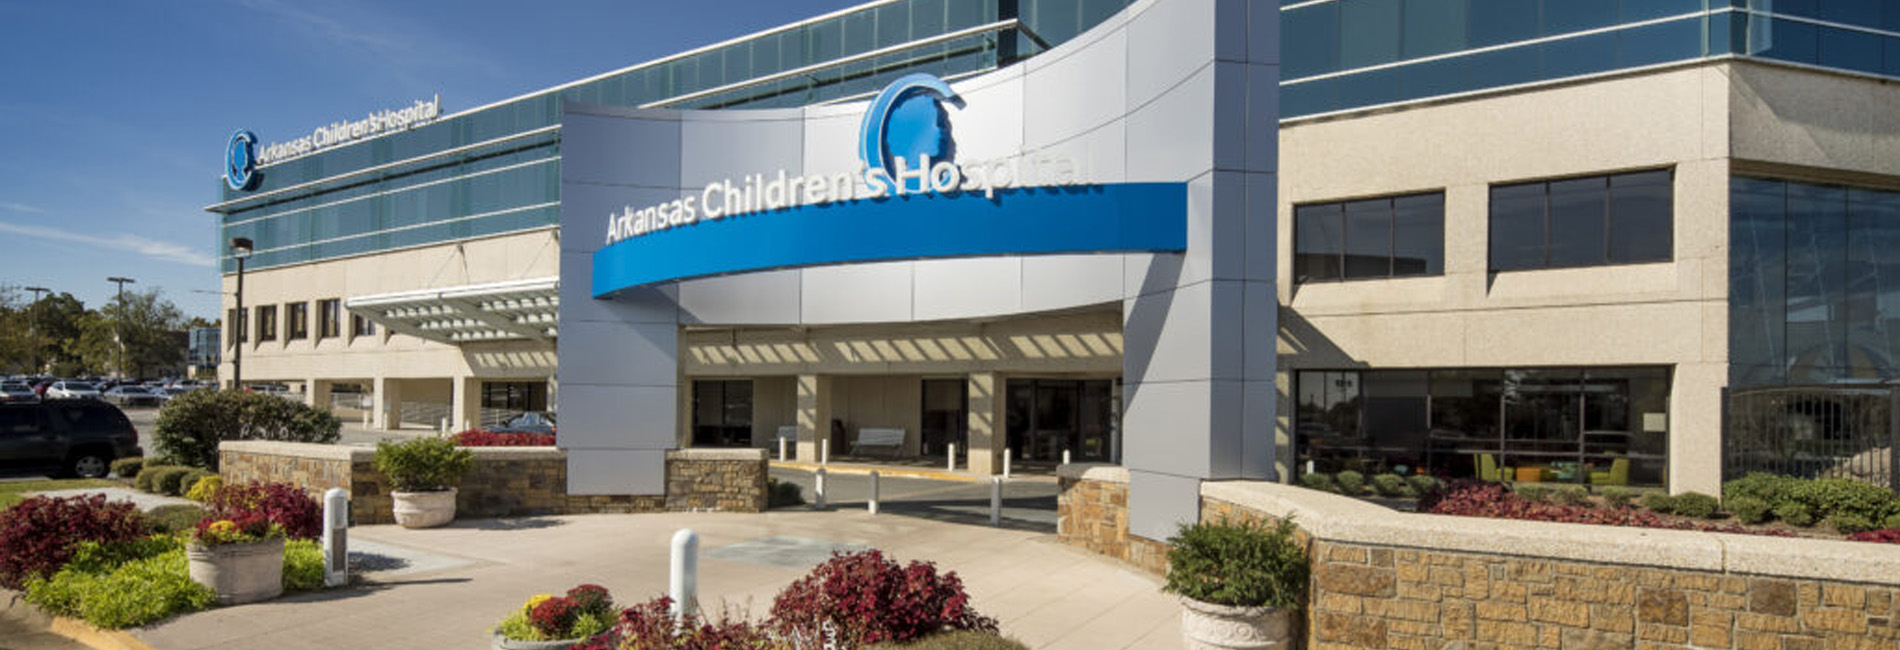 Arkansas Children’s Research Institute